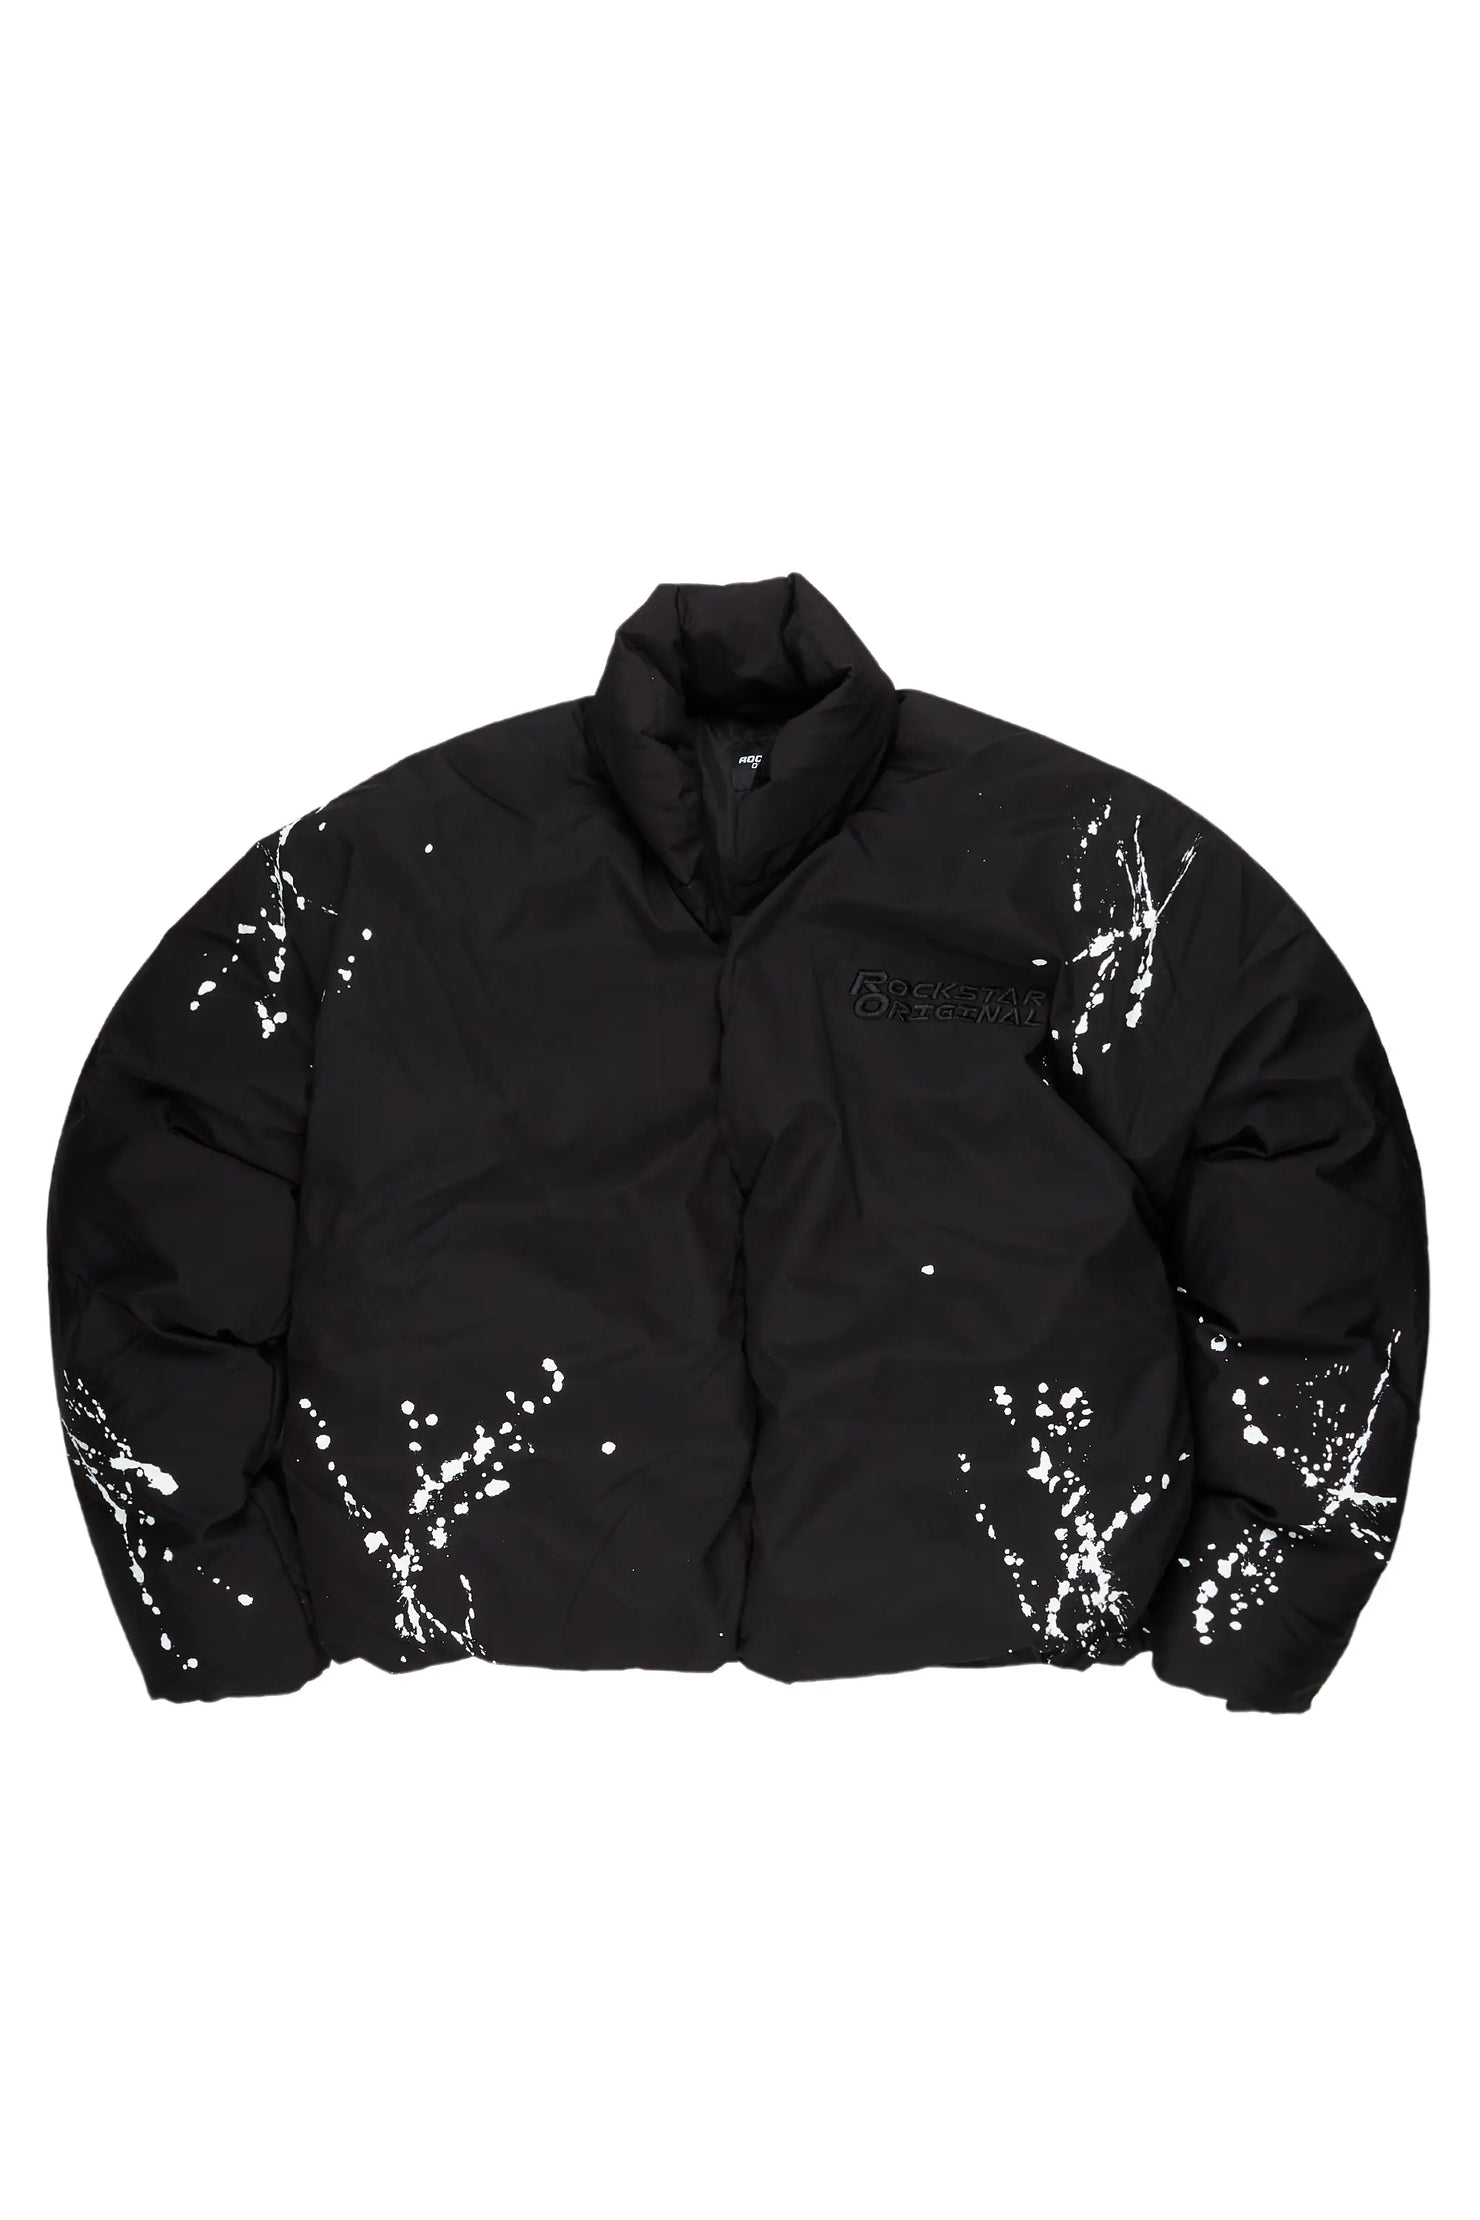 Rabbie Black/White Puffer Jacket